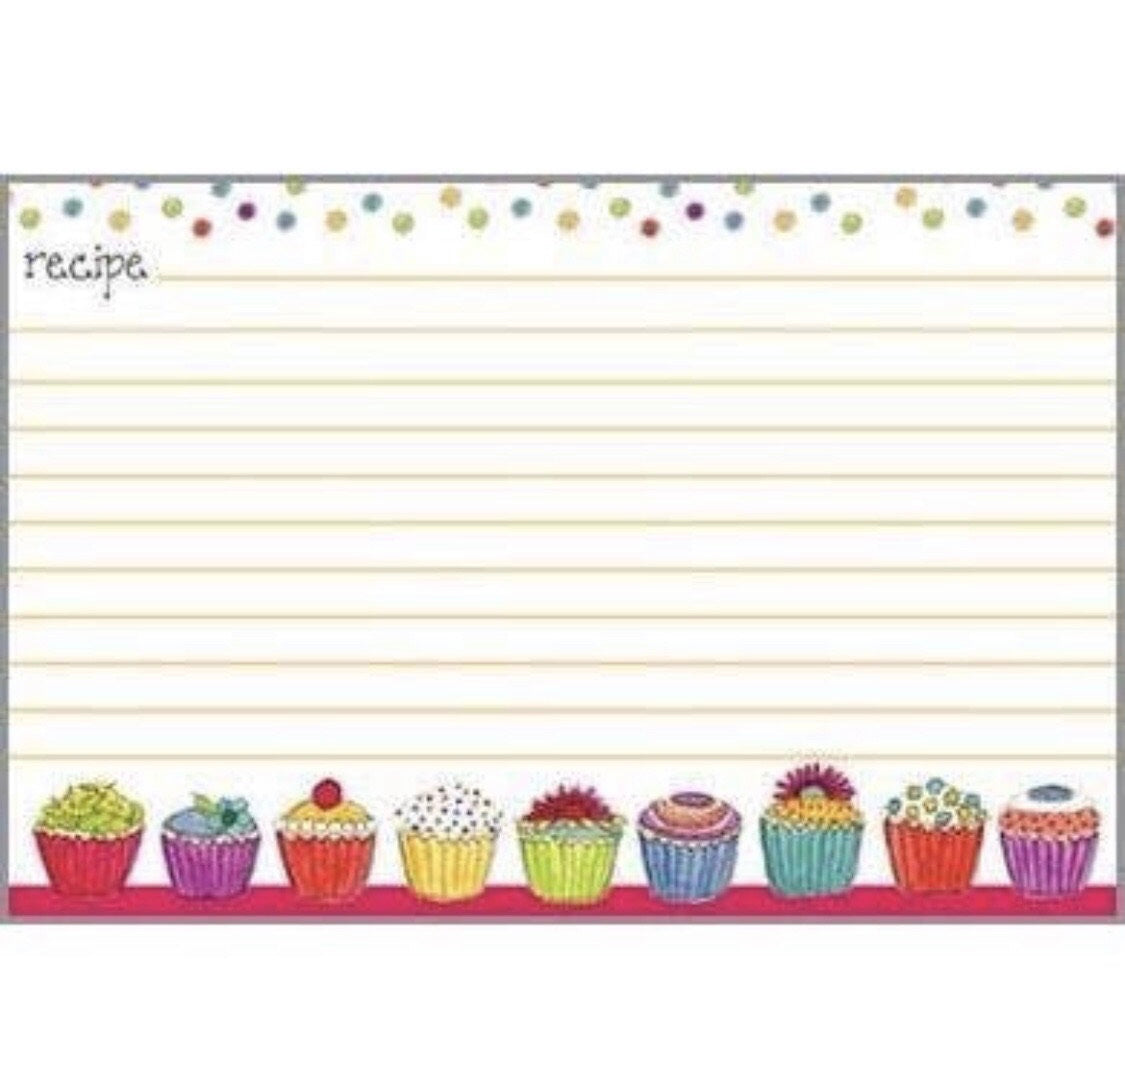 Recipe Cards - Colorful Cupcakes